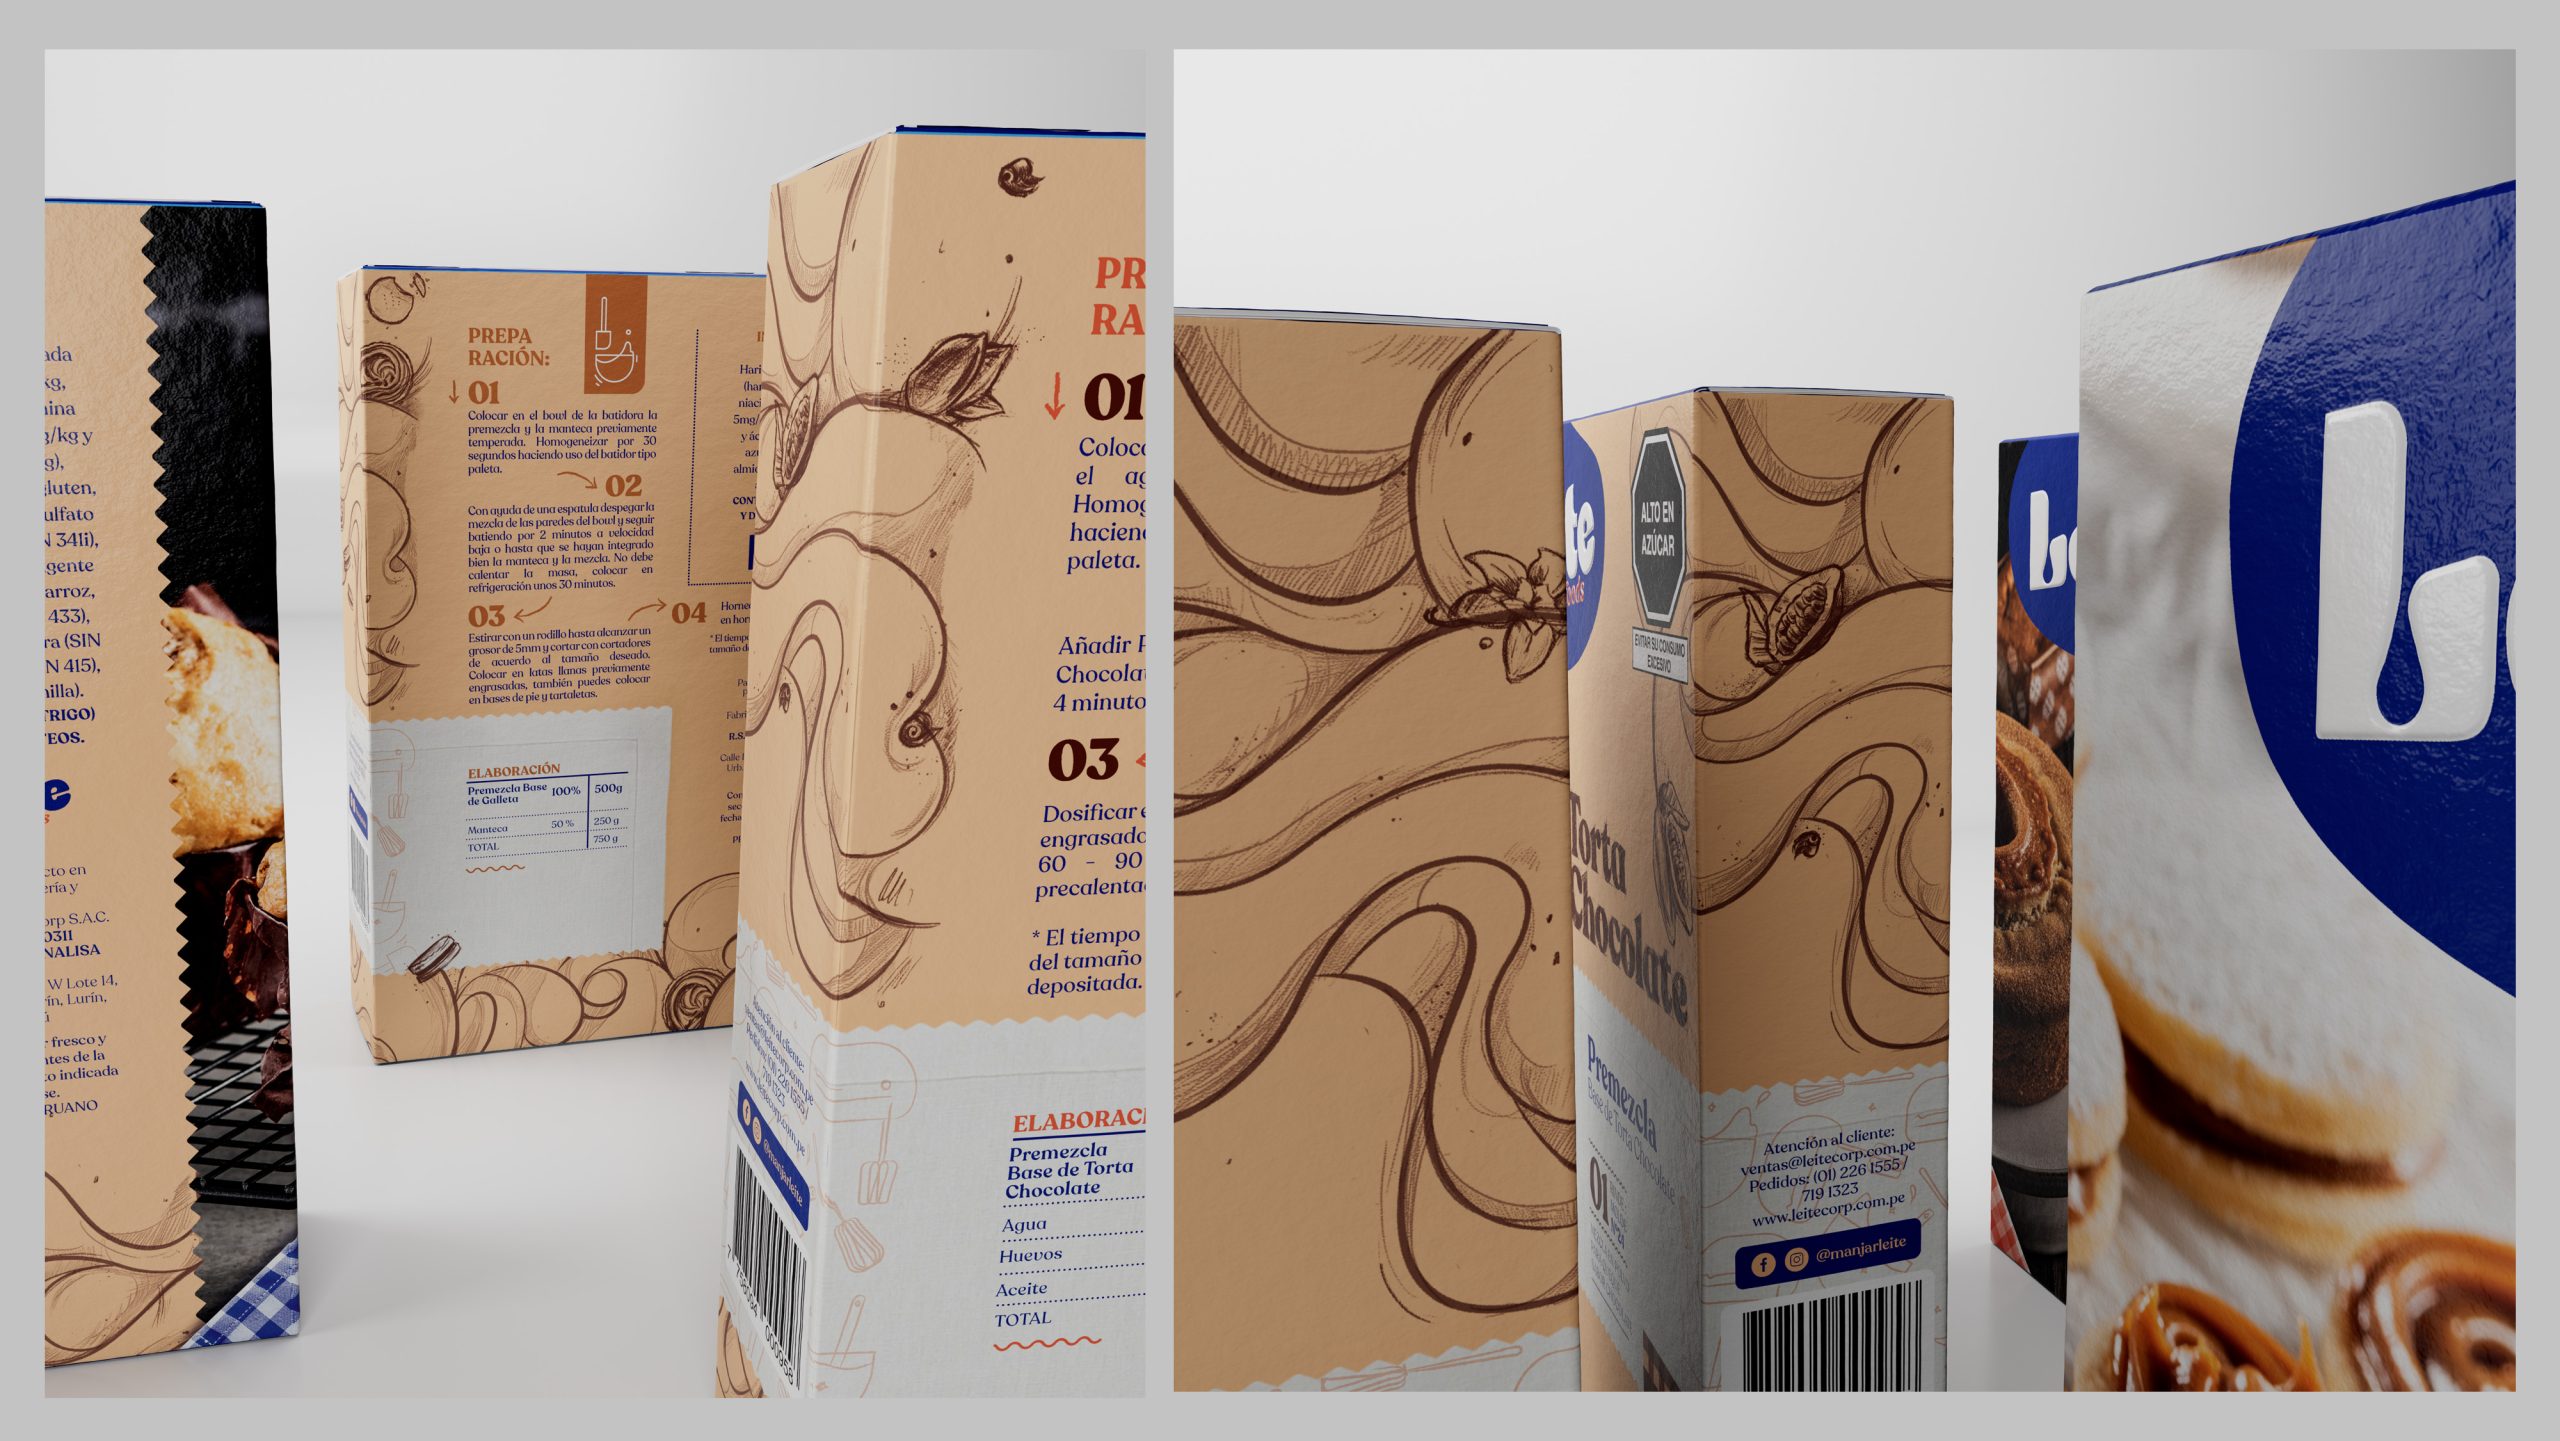 Premixes Leite | Packaging